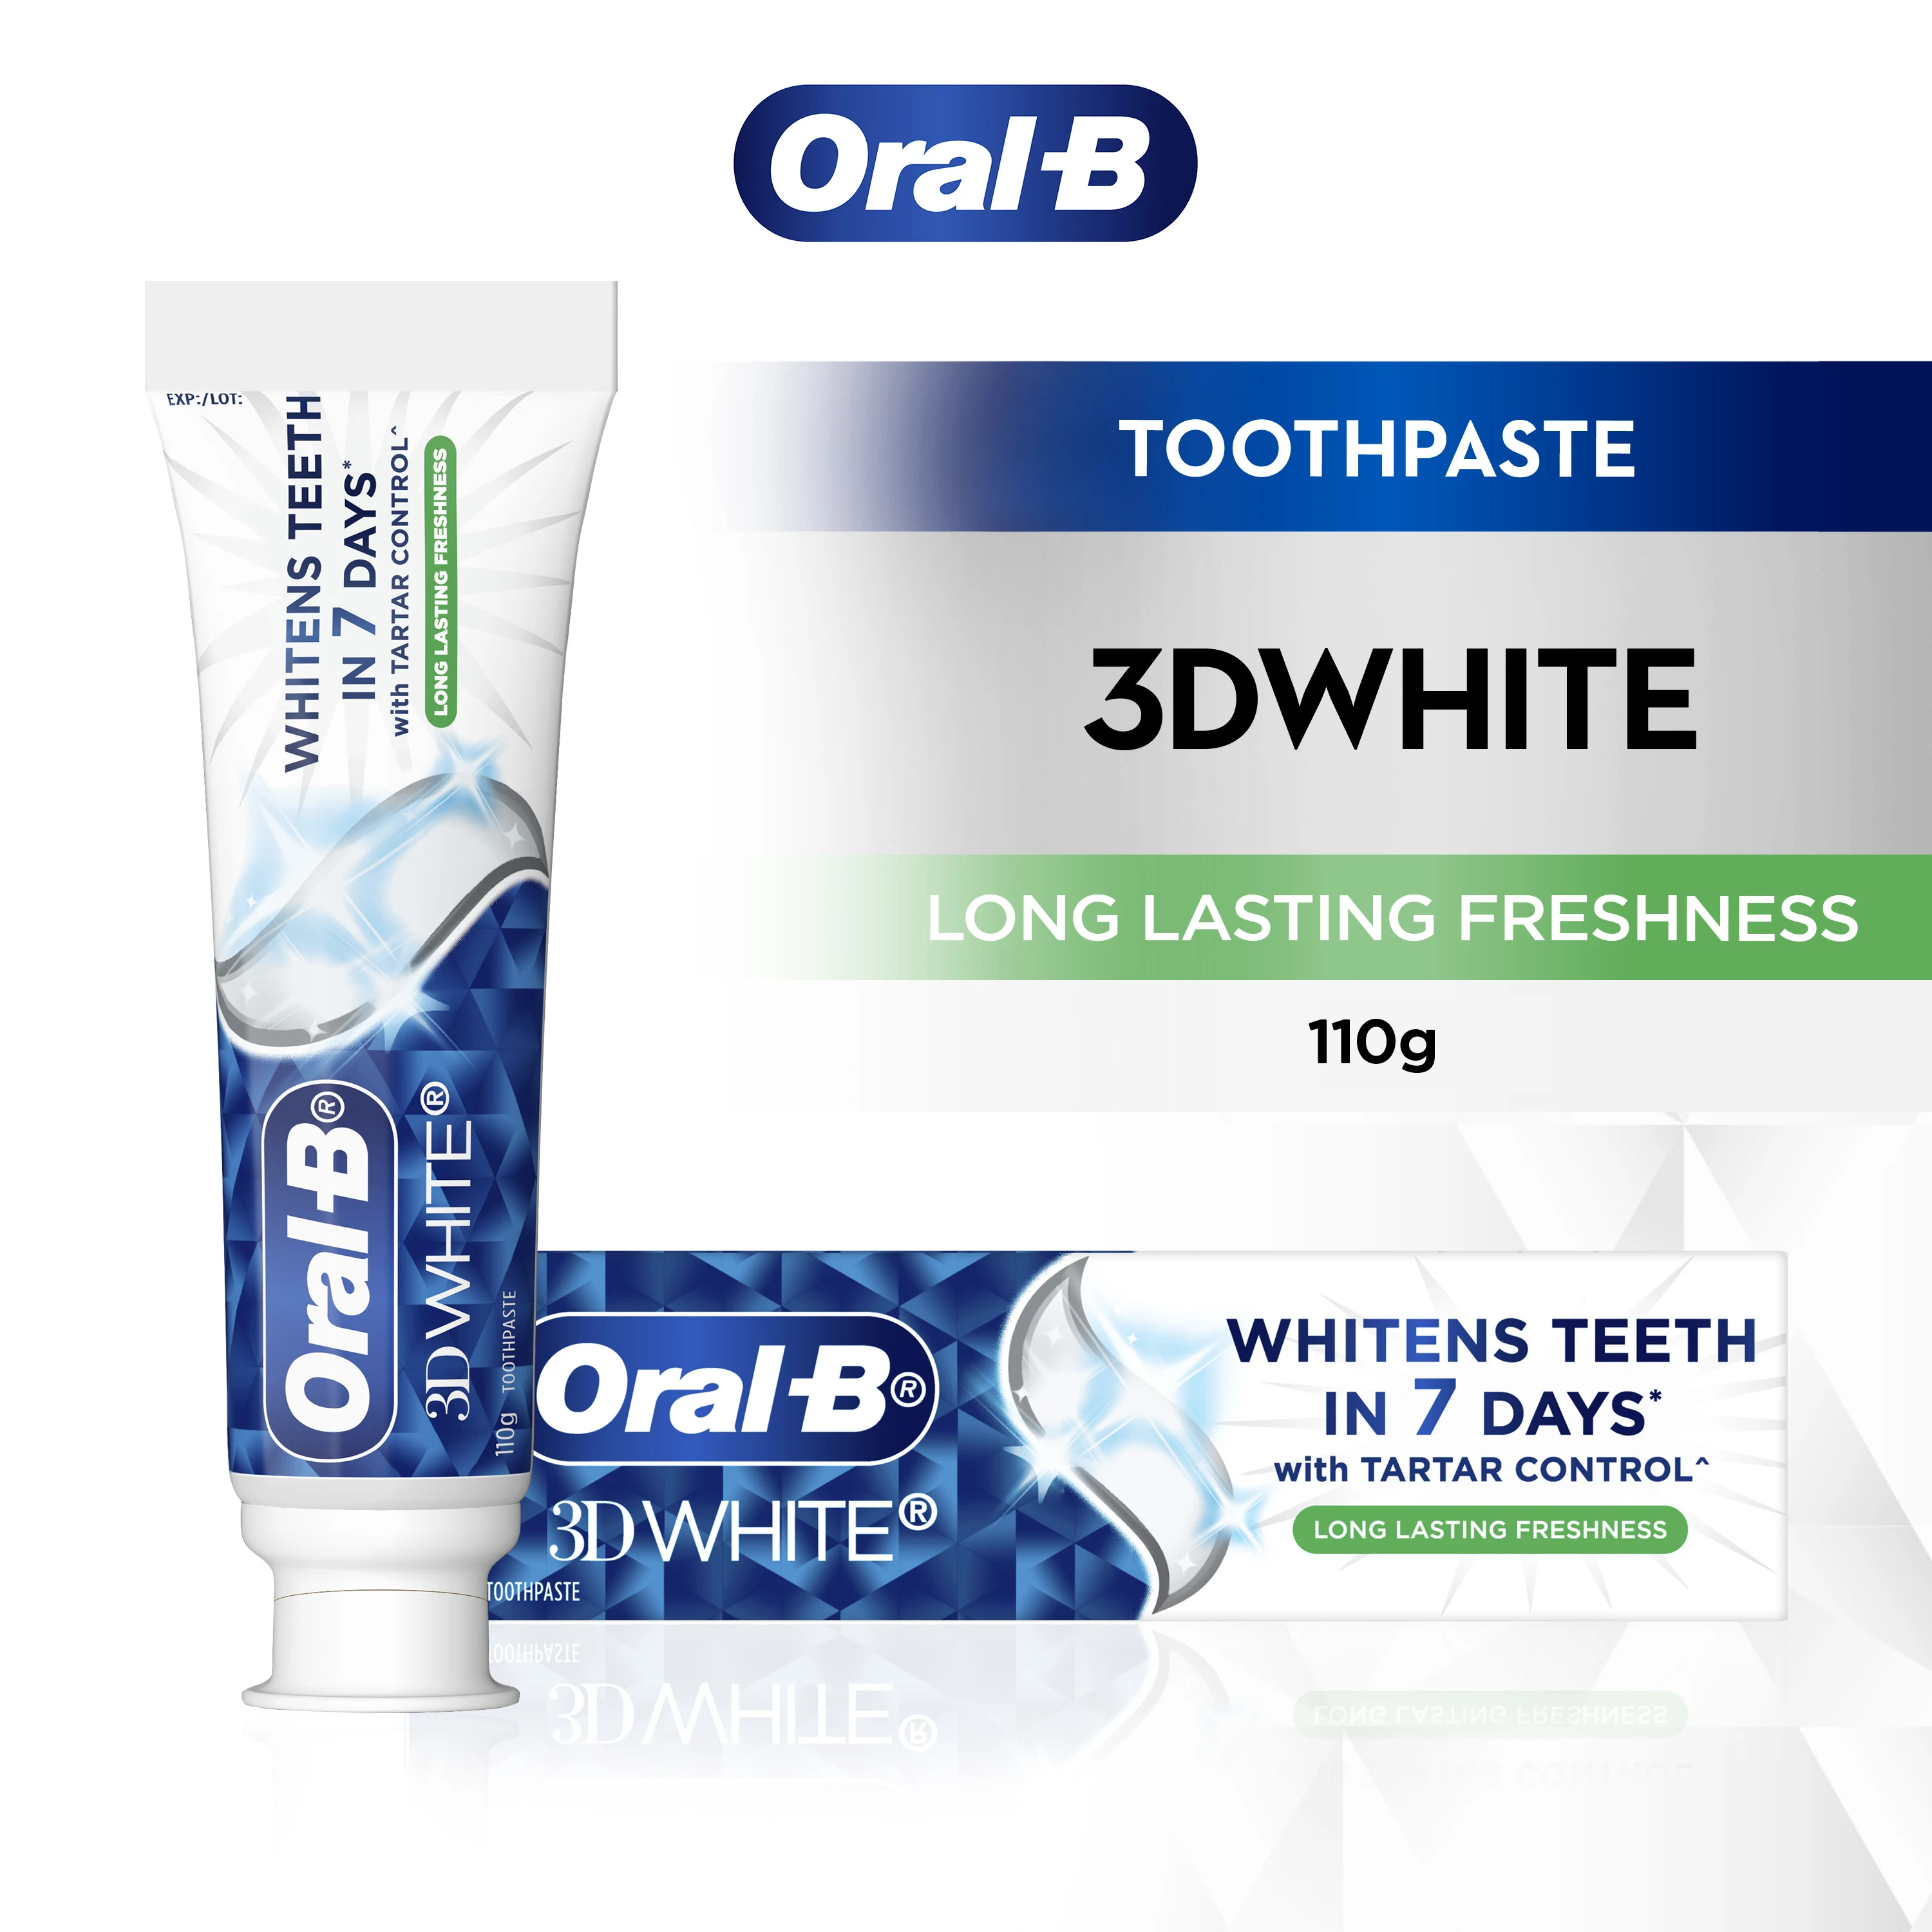 Oral-B 3DWhite Long Lasting Freshness Toothpaste 